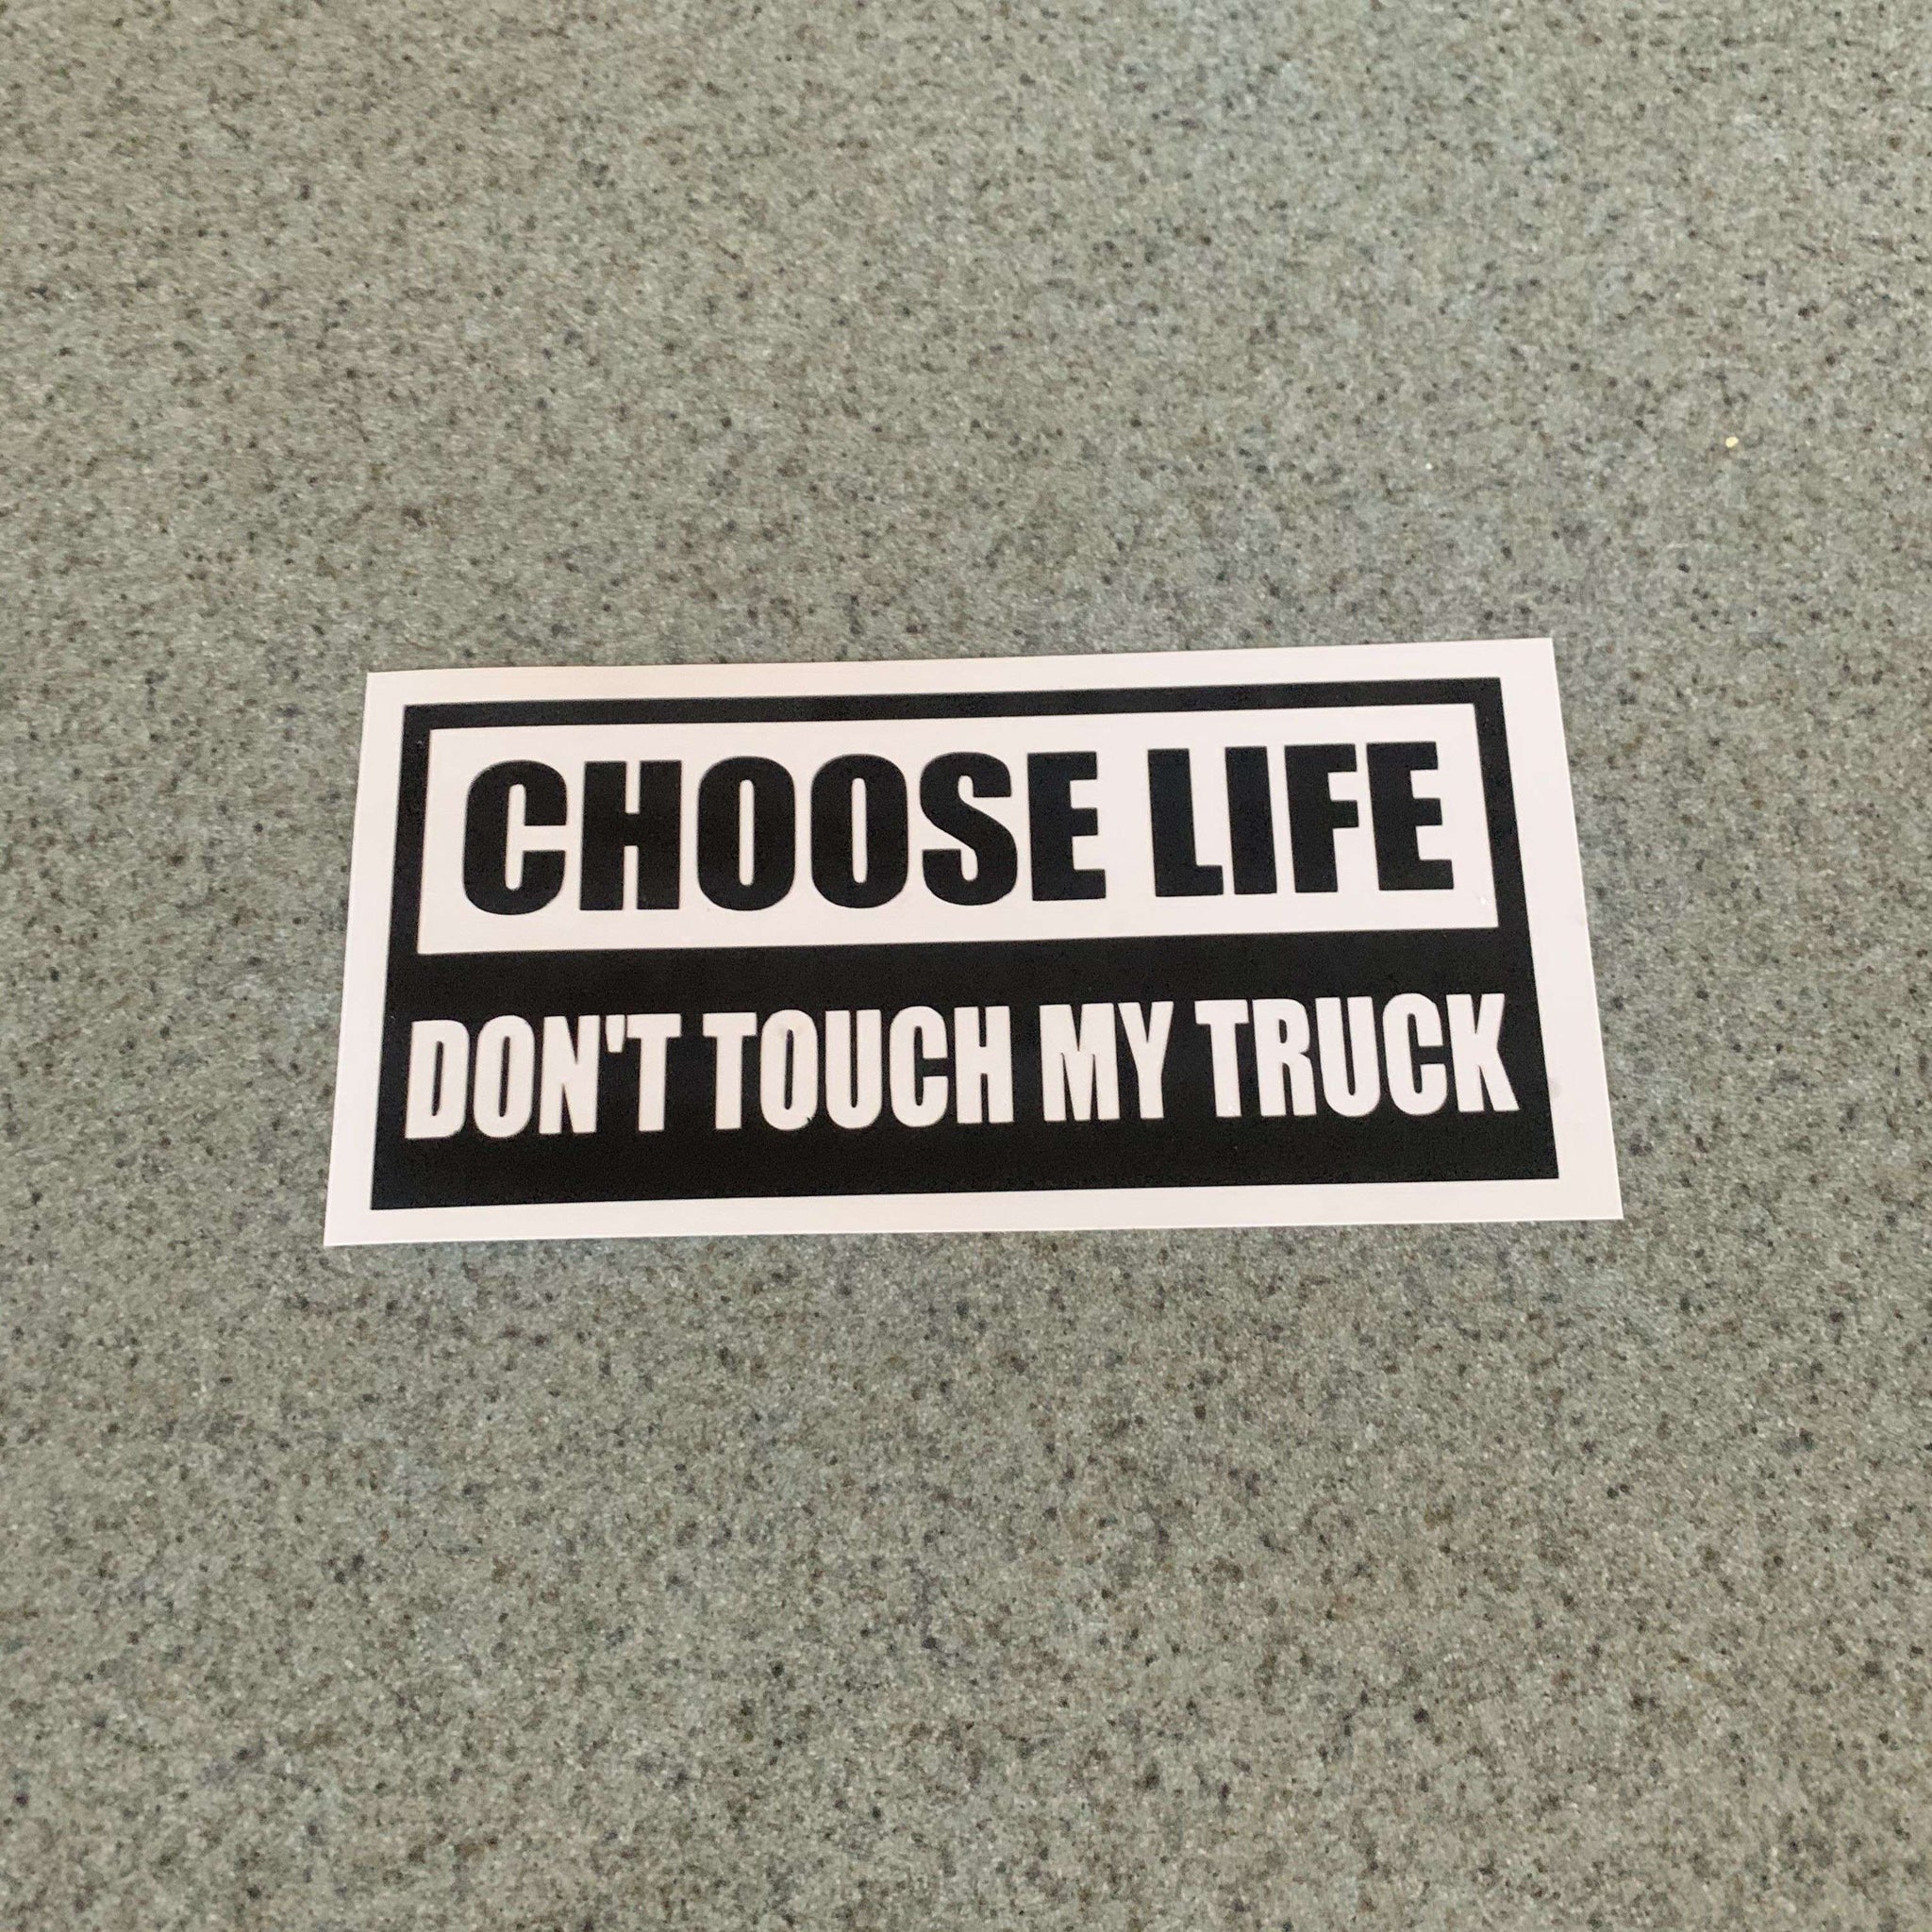 Because Truck Stuff Sticker — Needs More Sticker